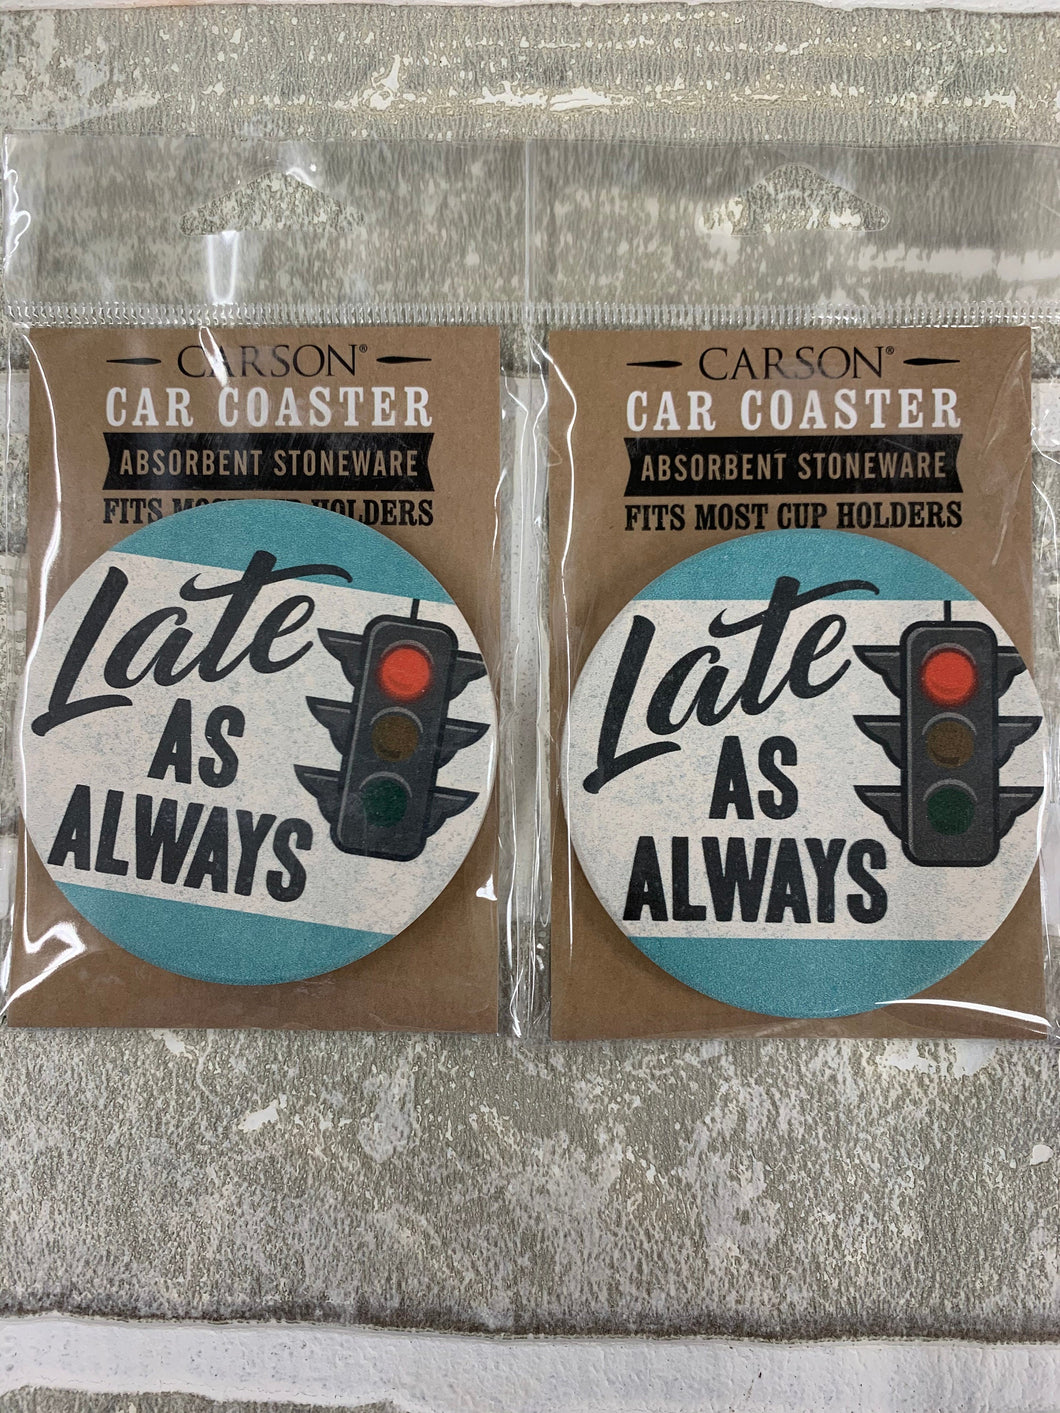 Car coasters